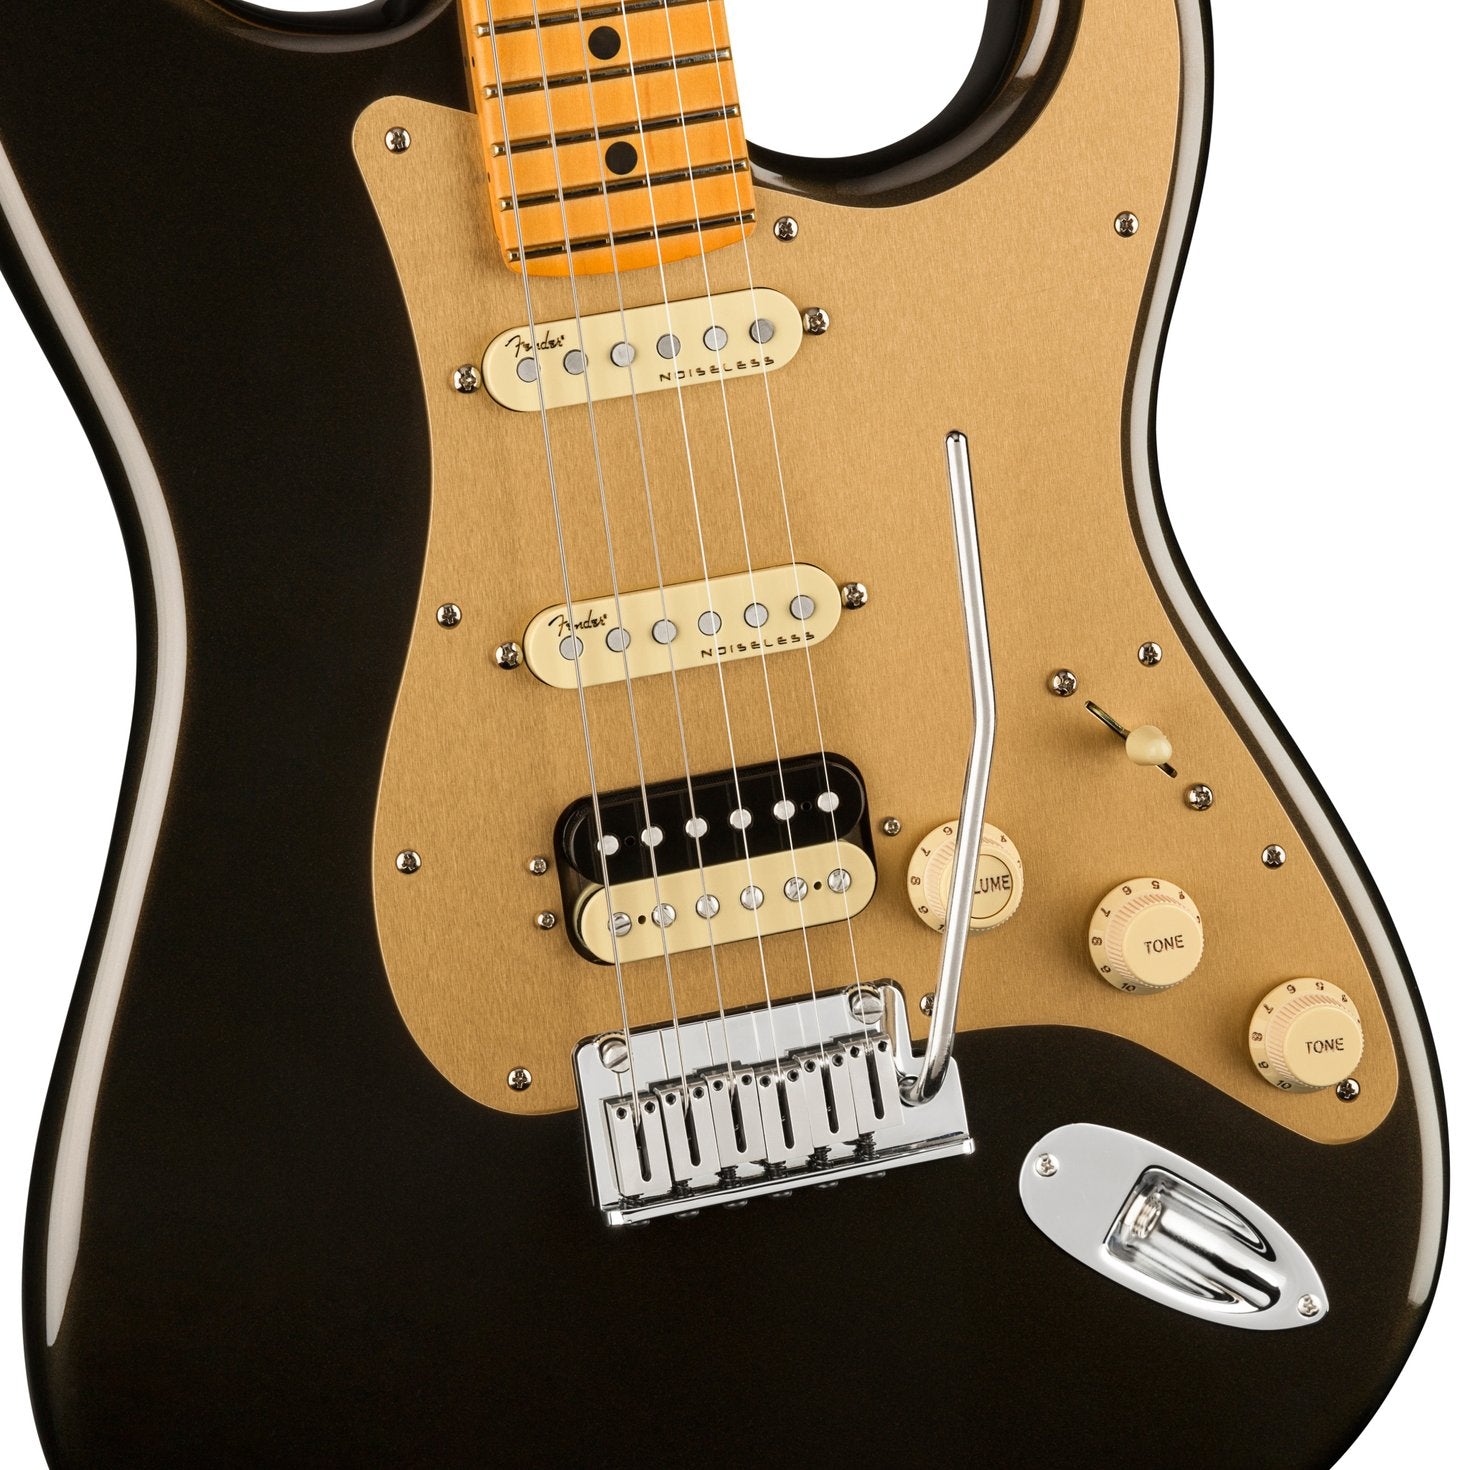 Fender American Ultra HSS Stratocaster Electric Guitar, Maple FB, Texas Tea, FENDER, ELECTRIC GUITAR, fender-electric-guitar-f03-011-8022-790, ZOSO MUSIC SDN BHD